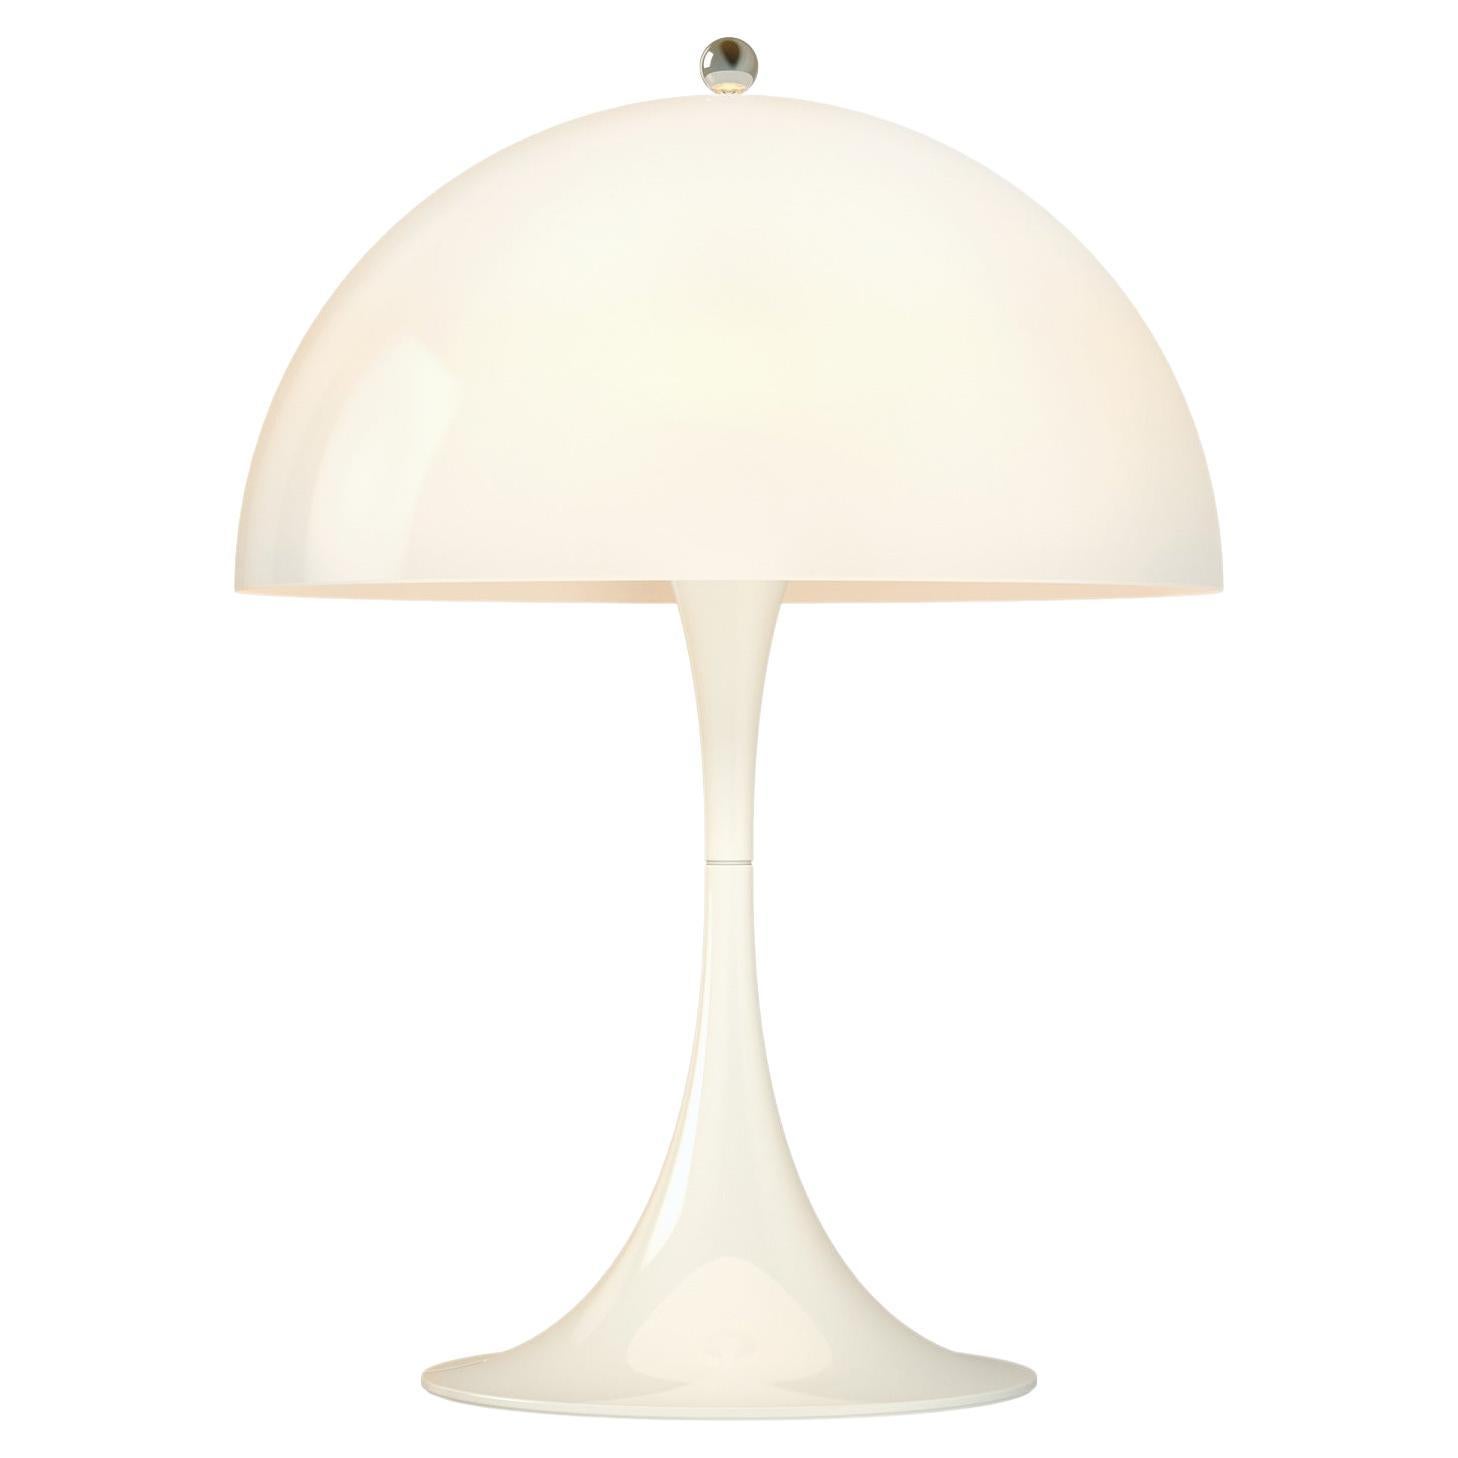 Louis Poulsen Panthella 250 Table Lamp in Opal by Verner Panton